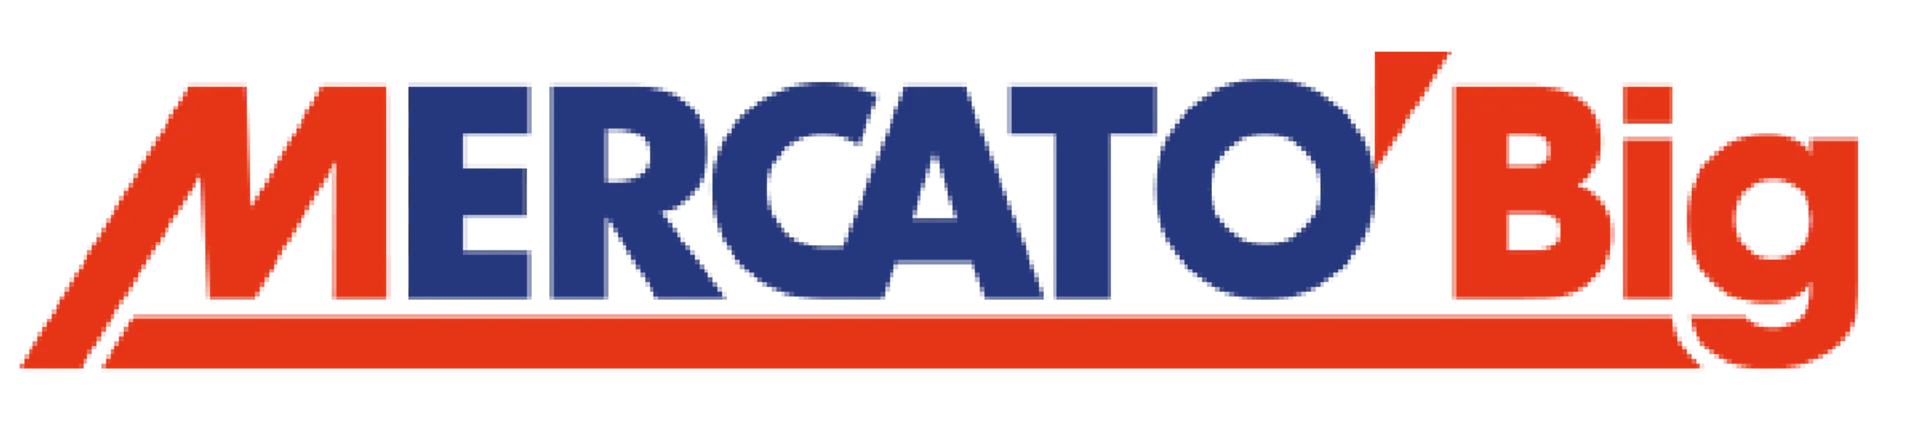 MERCATÒ BIG logo